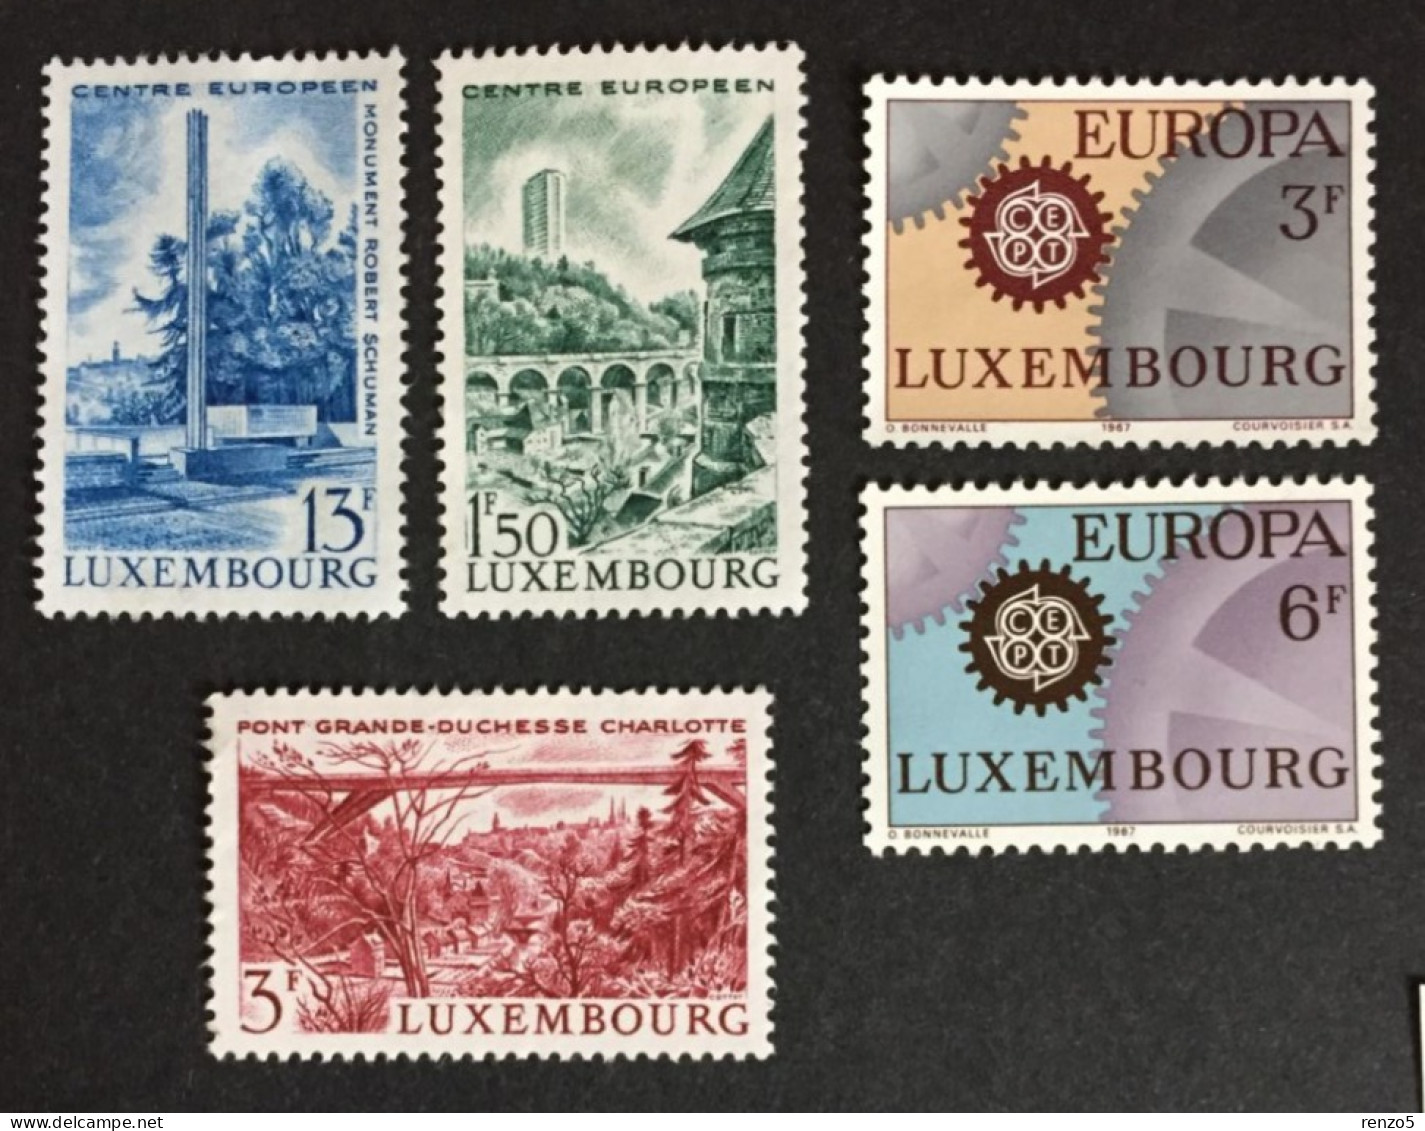 1966 Luxembourg - Tourism Landmarks, Europa CEPT, Lux European Center - Unused ( No Gum ) - Ongebruikt